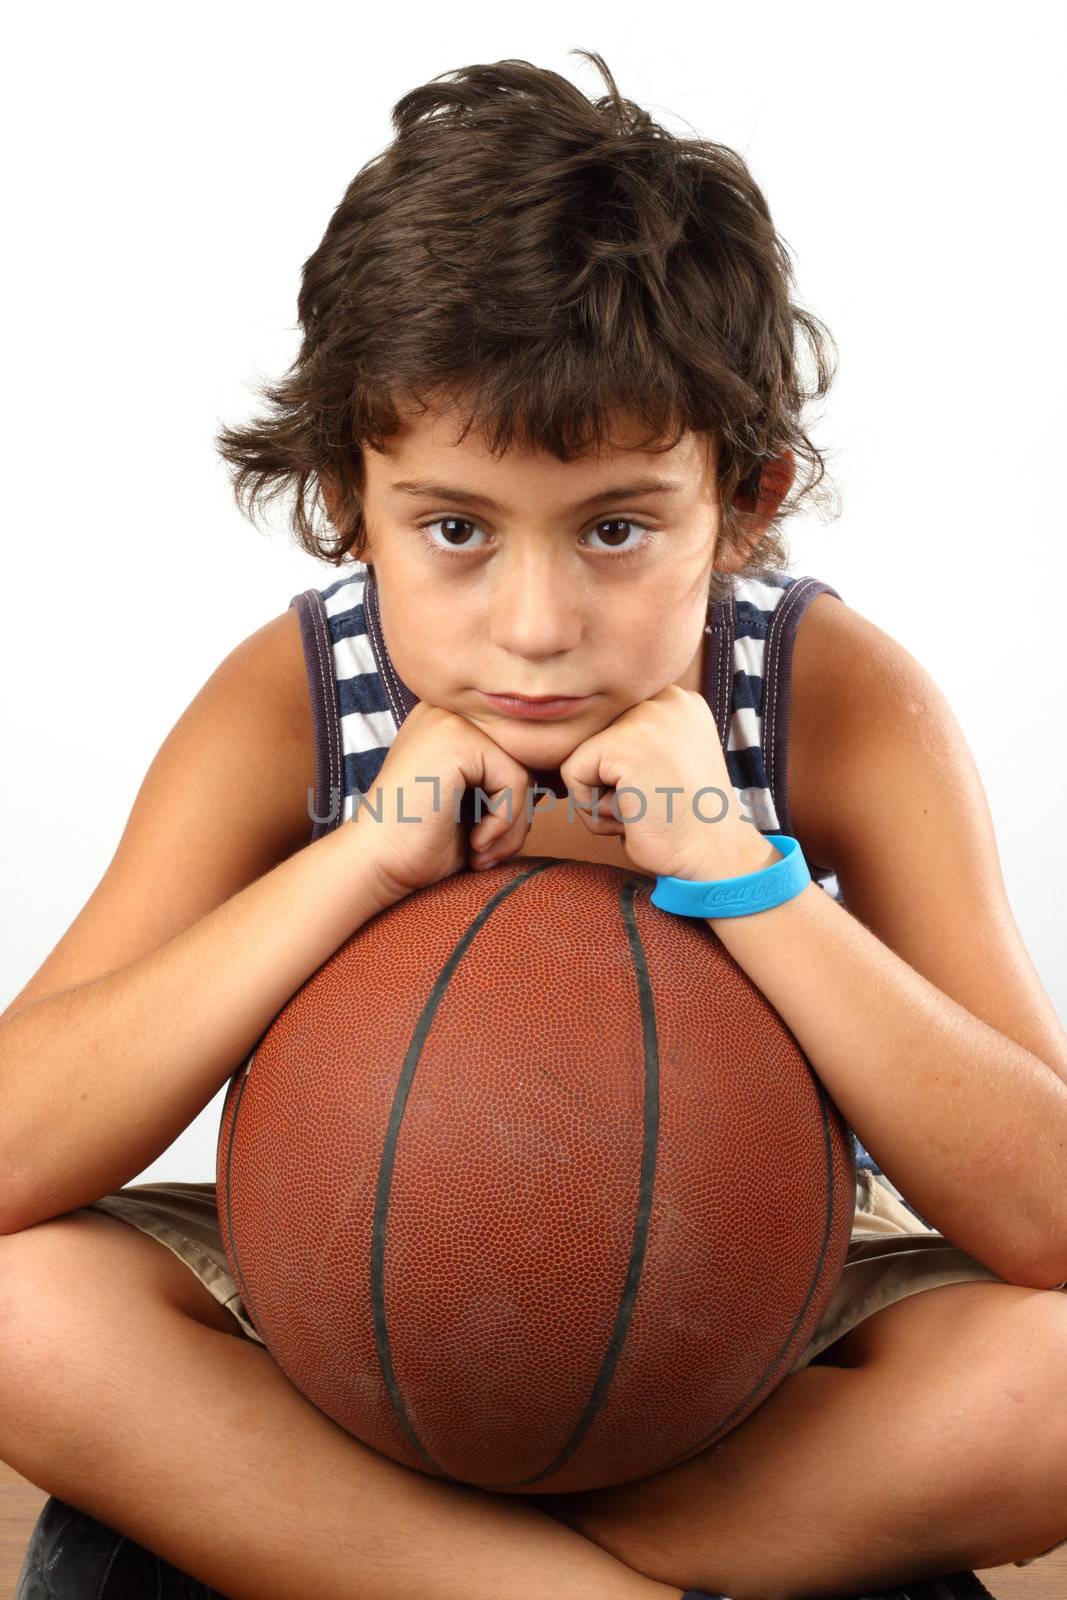 boy with basketball ball by alexkosev